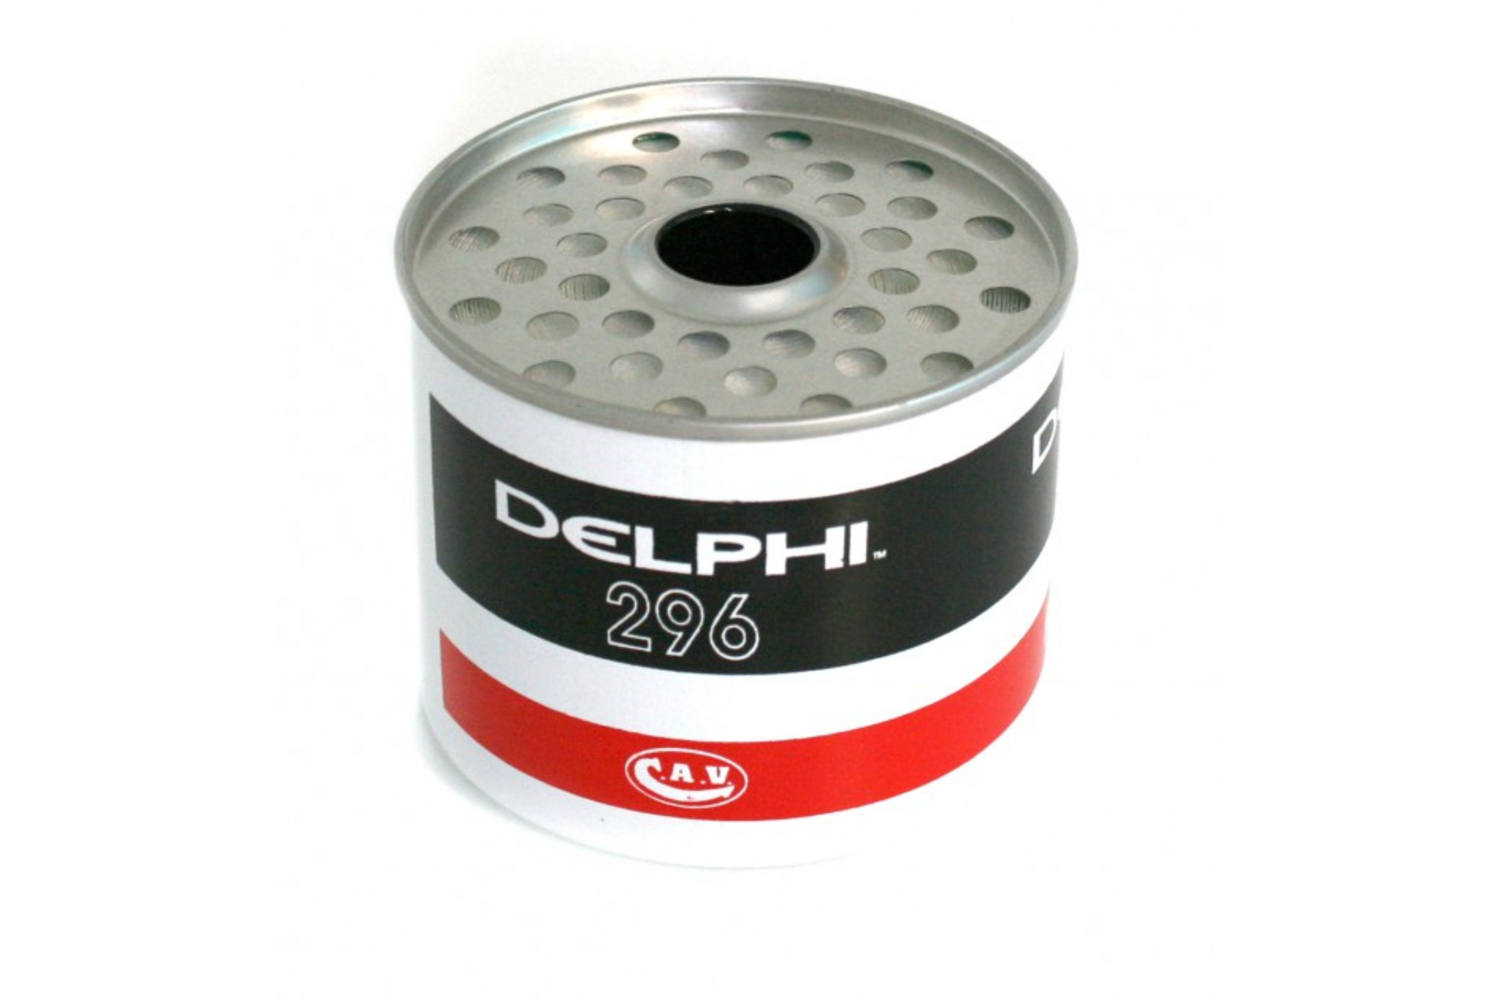 Delphi 296 C.A.V. los brandstof filter